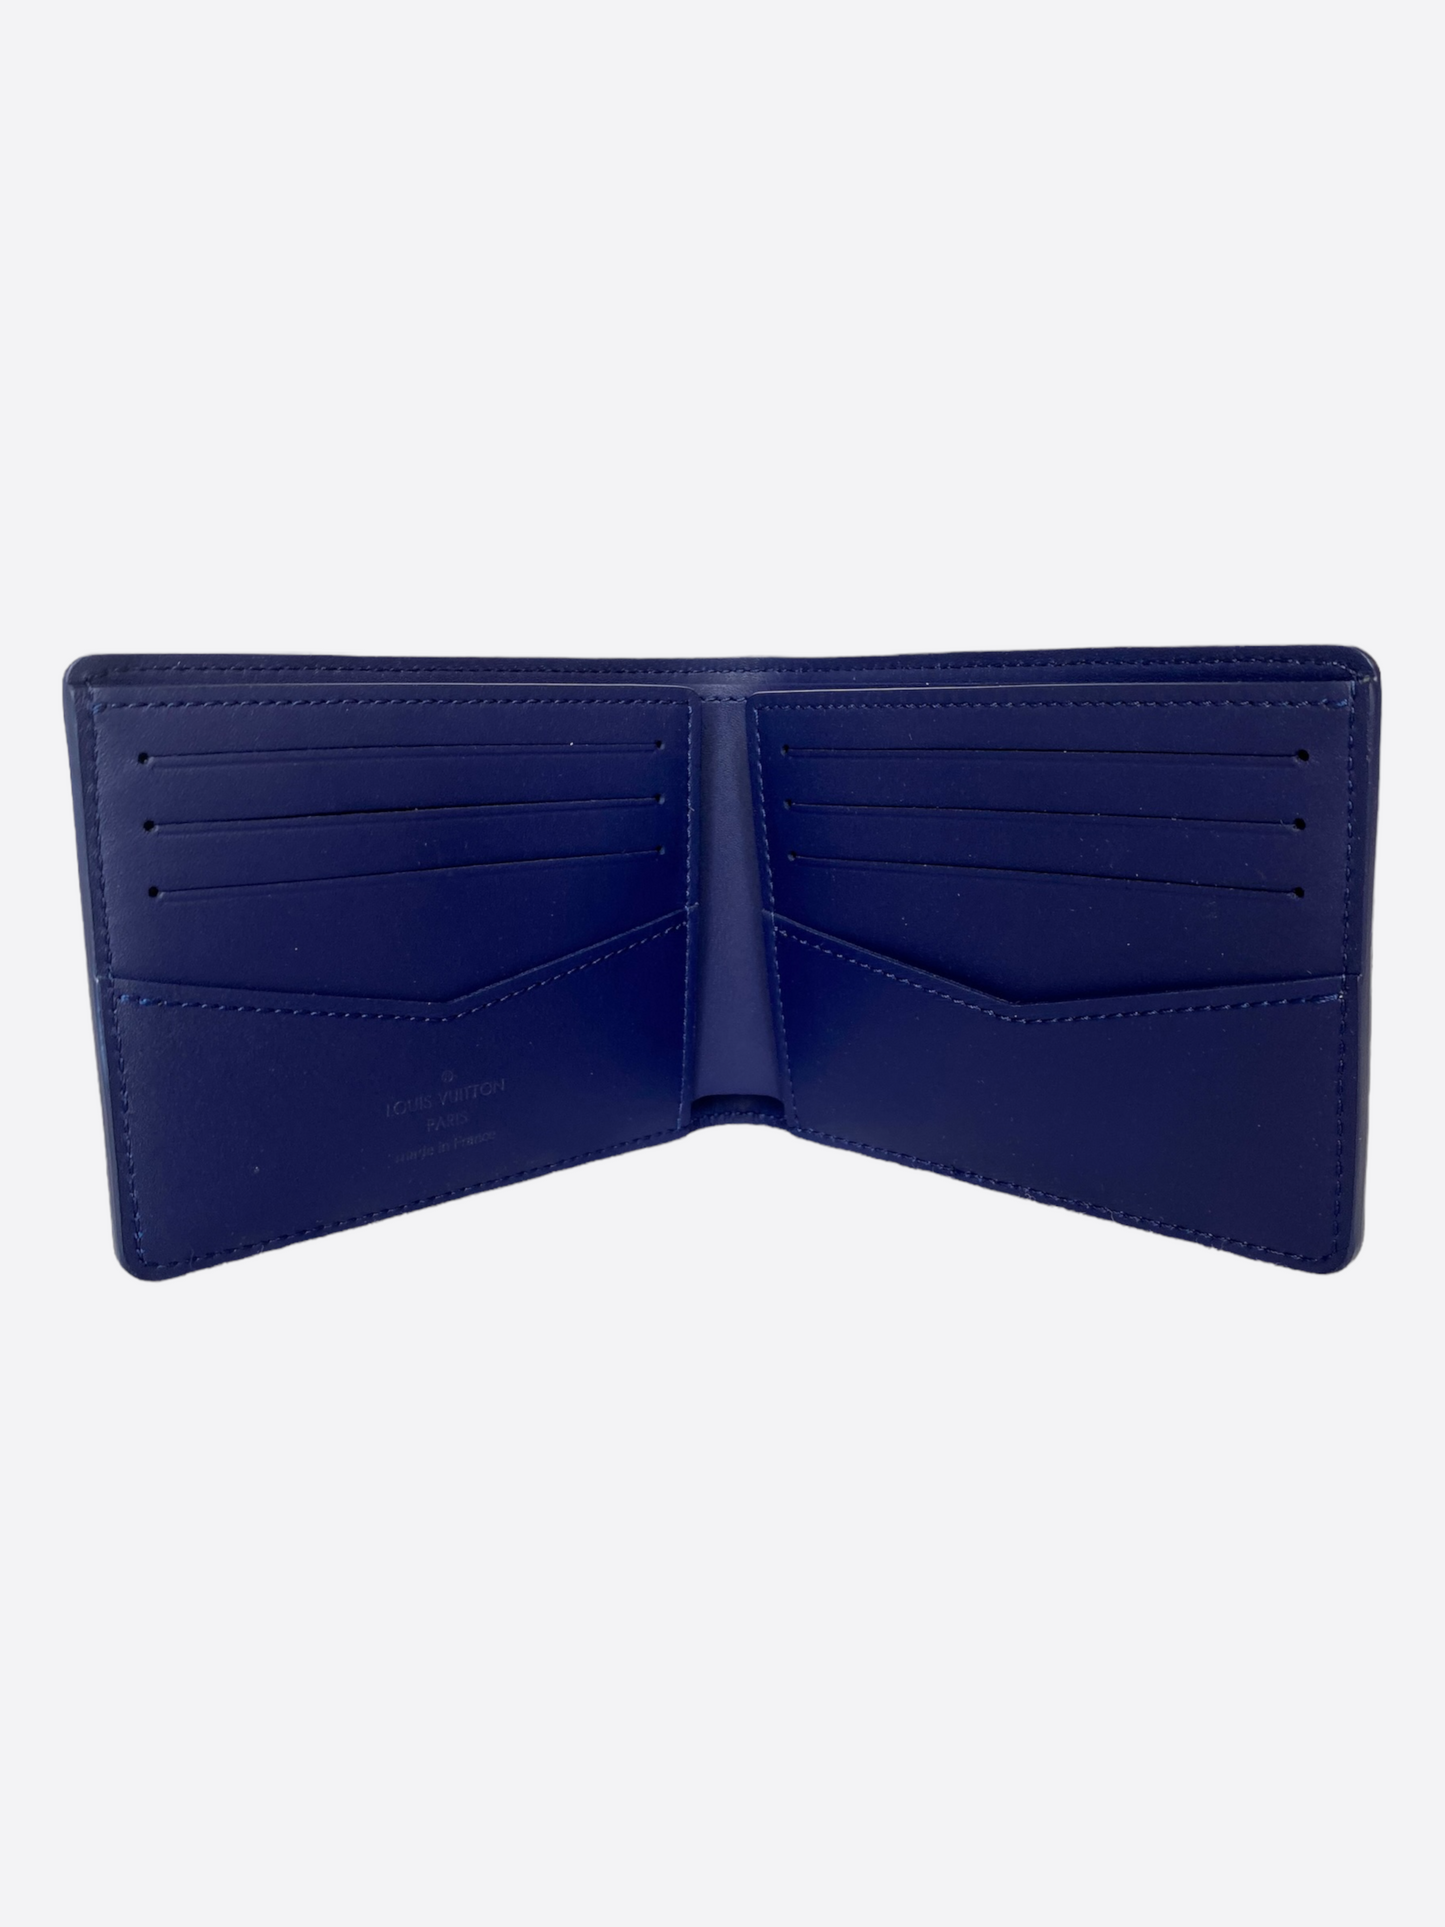 Pashmina Azul Denim Monogram doble vista Louis Vuitton - $9,900.00